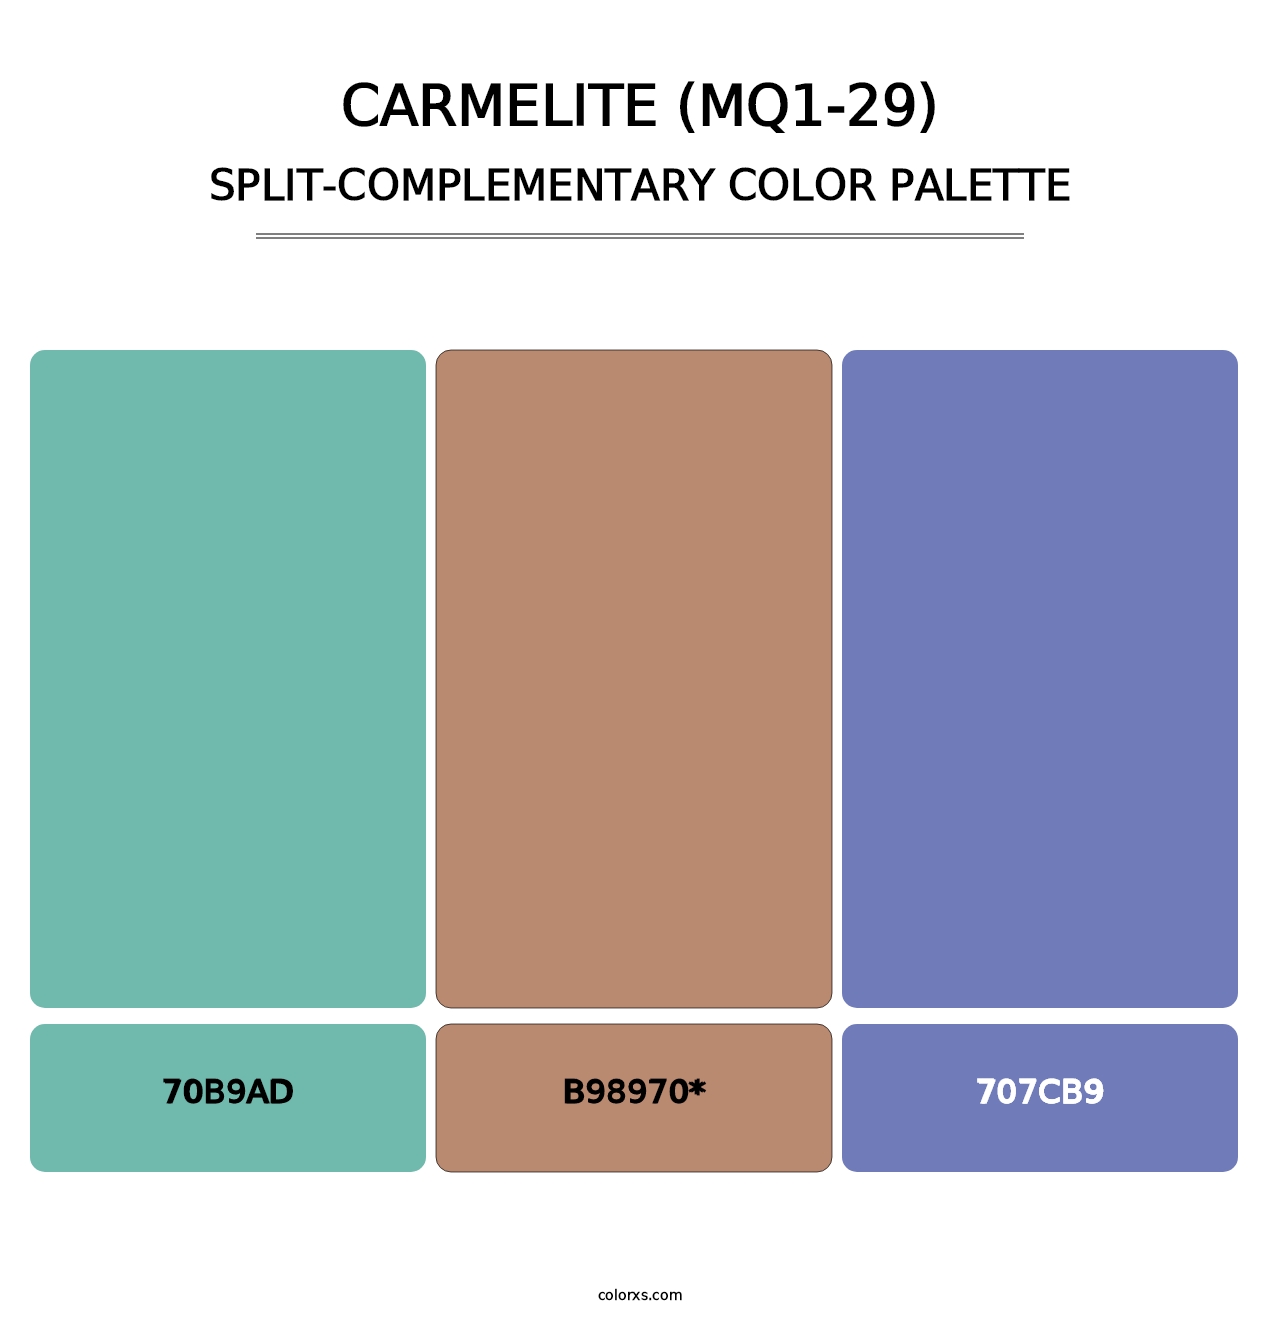 Carmelite (MQ1-29) - Split-Complementary Color Palette